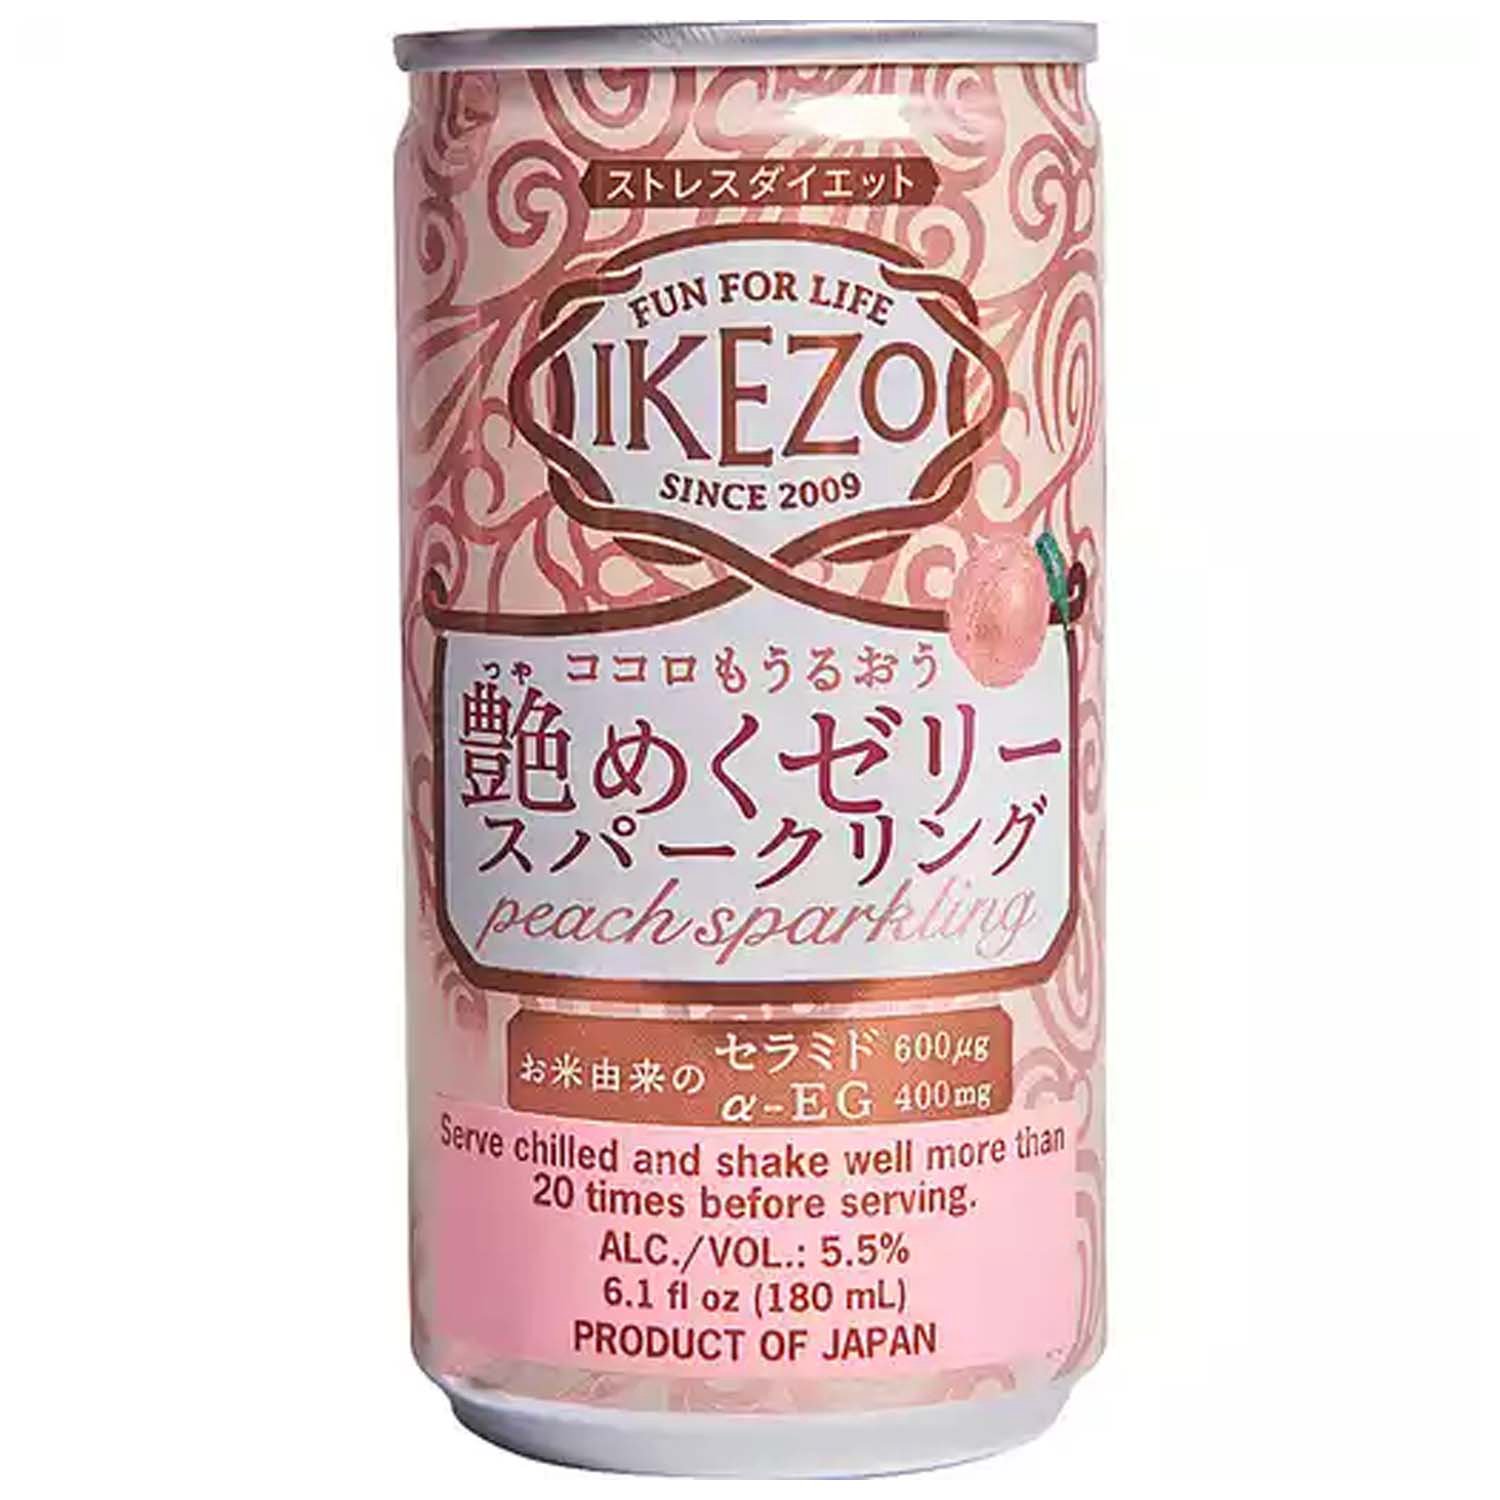 Ozeki Ikezo Sparkling Peach Jelly Sake - Foodland